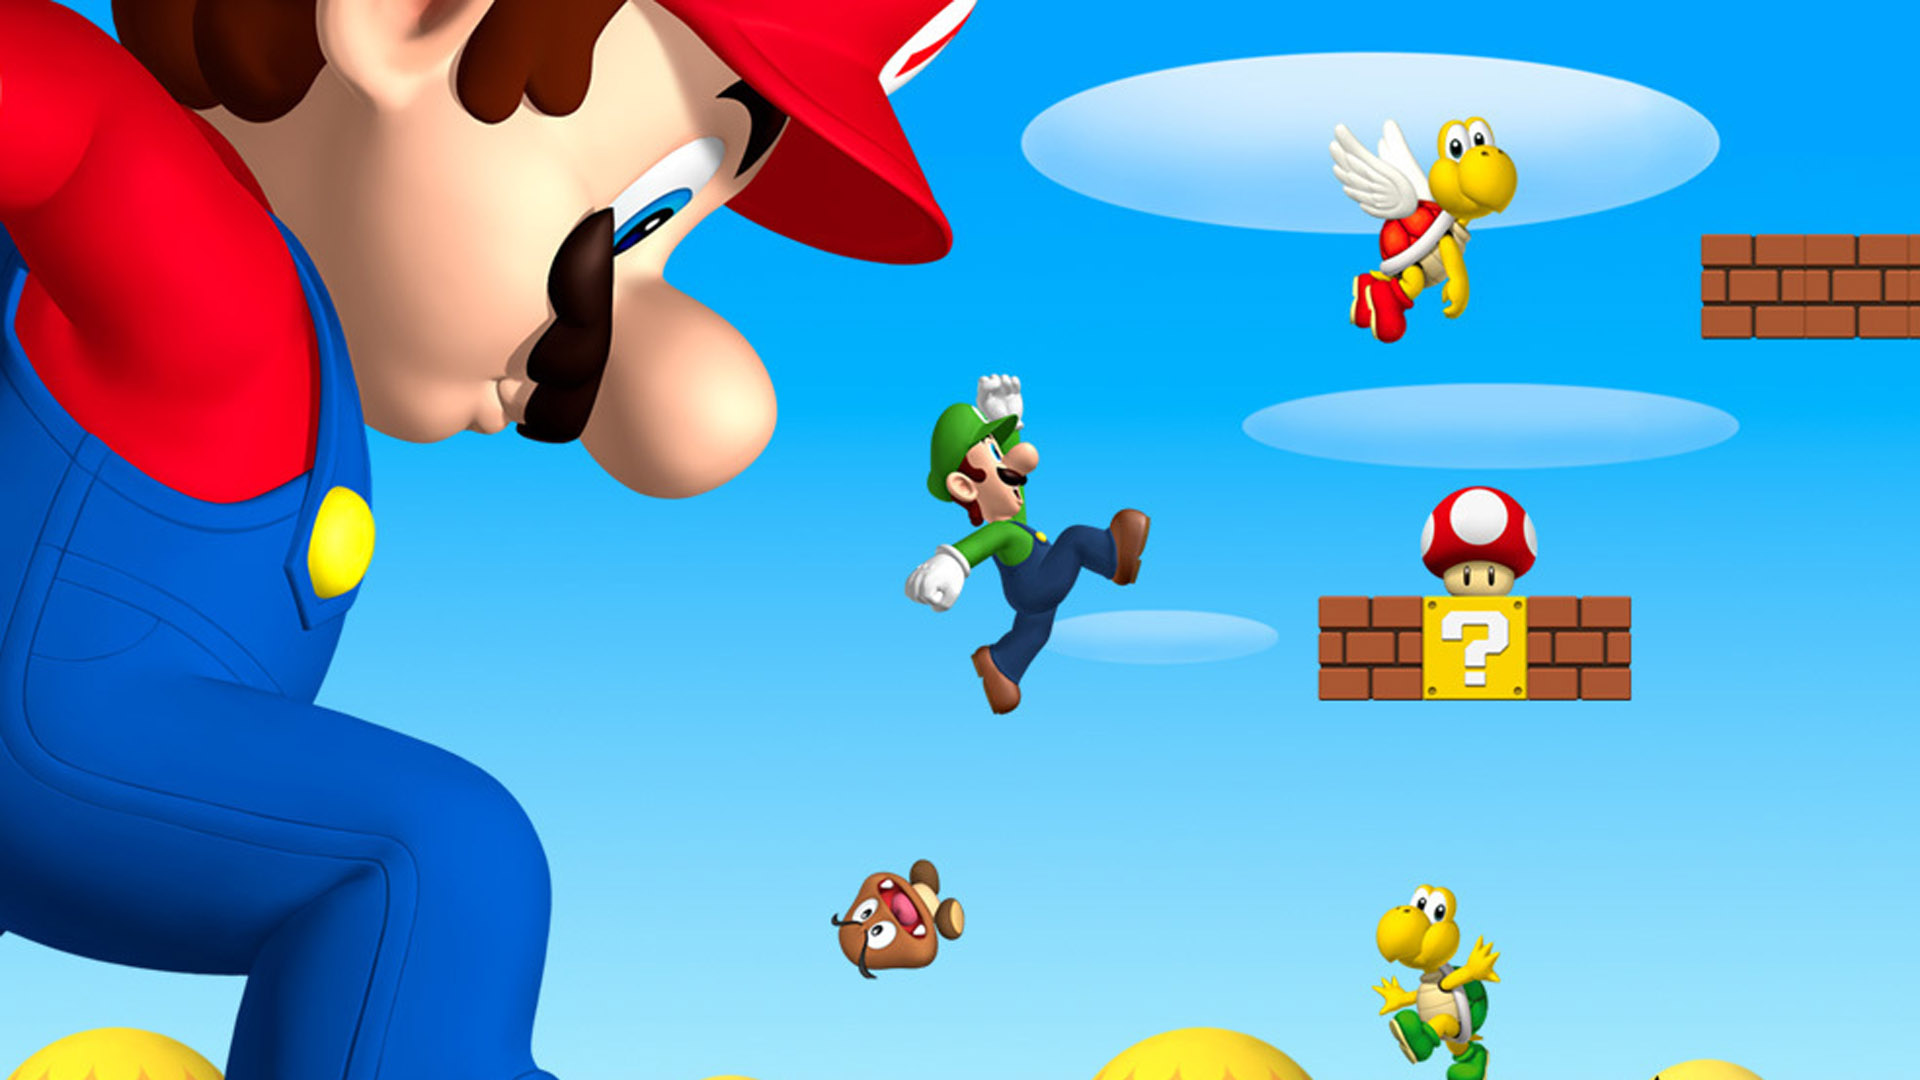 Super mario bros. New super Mario Bros. 2. 2006 Нью супер Марио БРОС. New супер Марио БРОС 3. Супер Марио БРОС Делюкс.